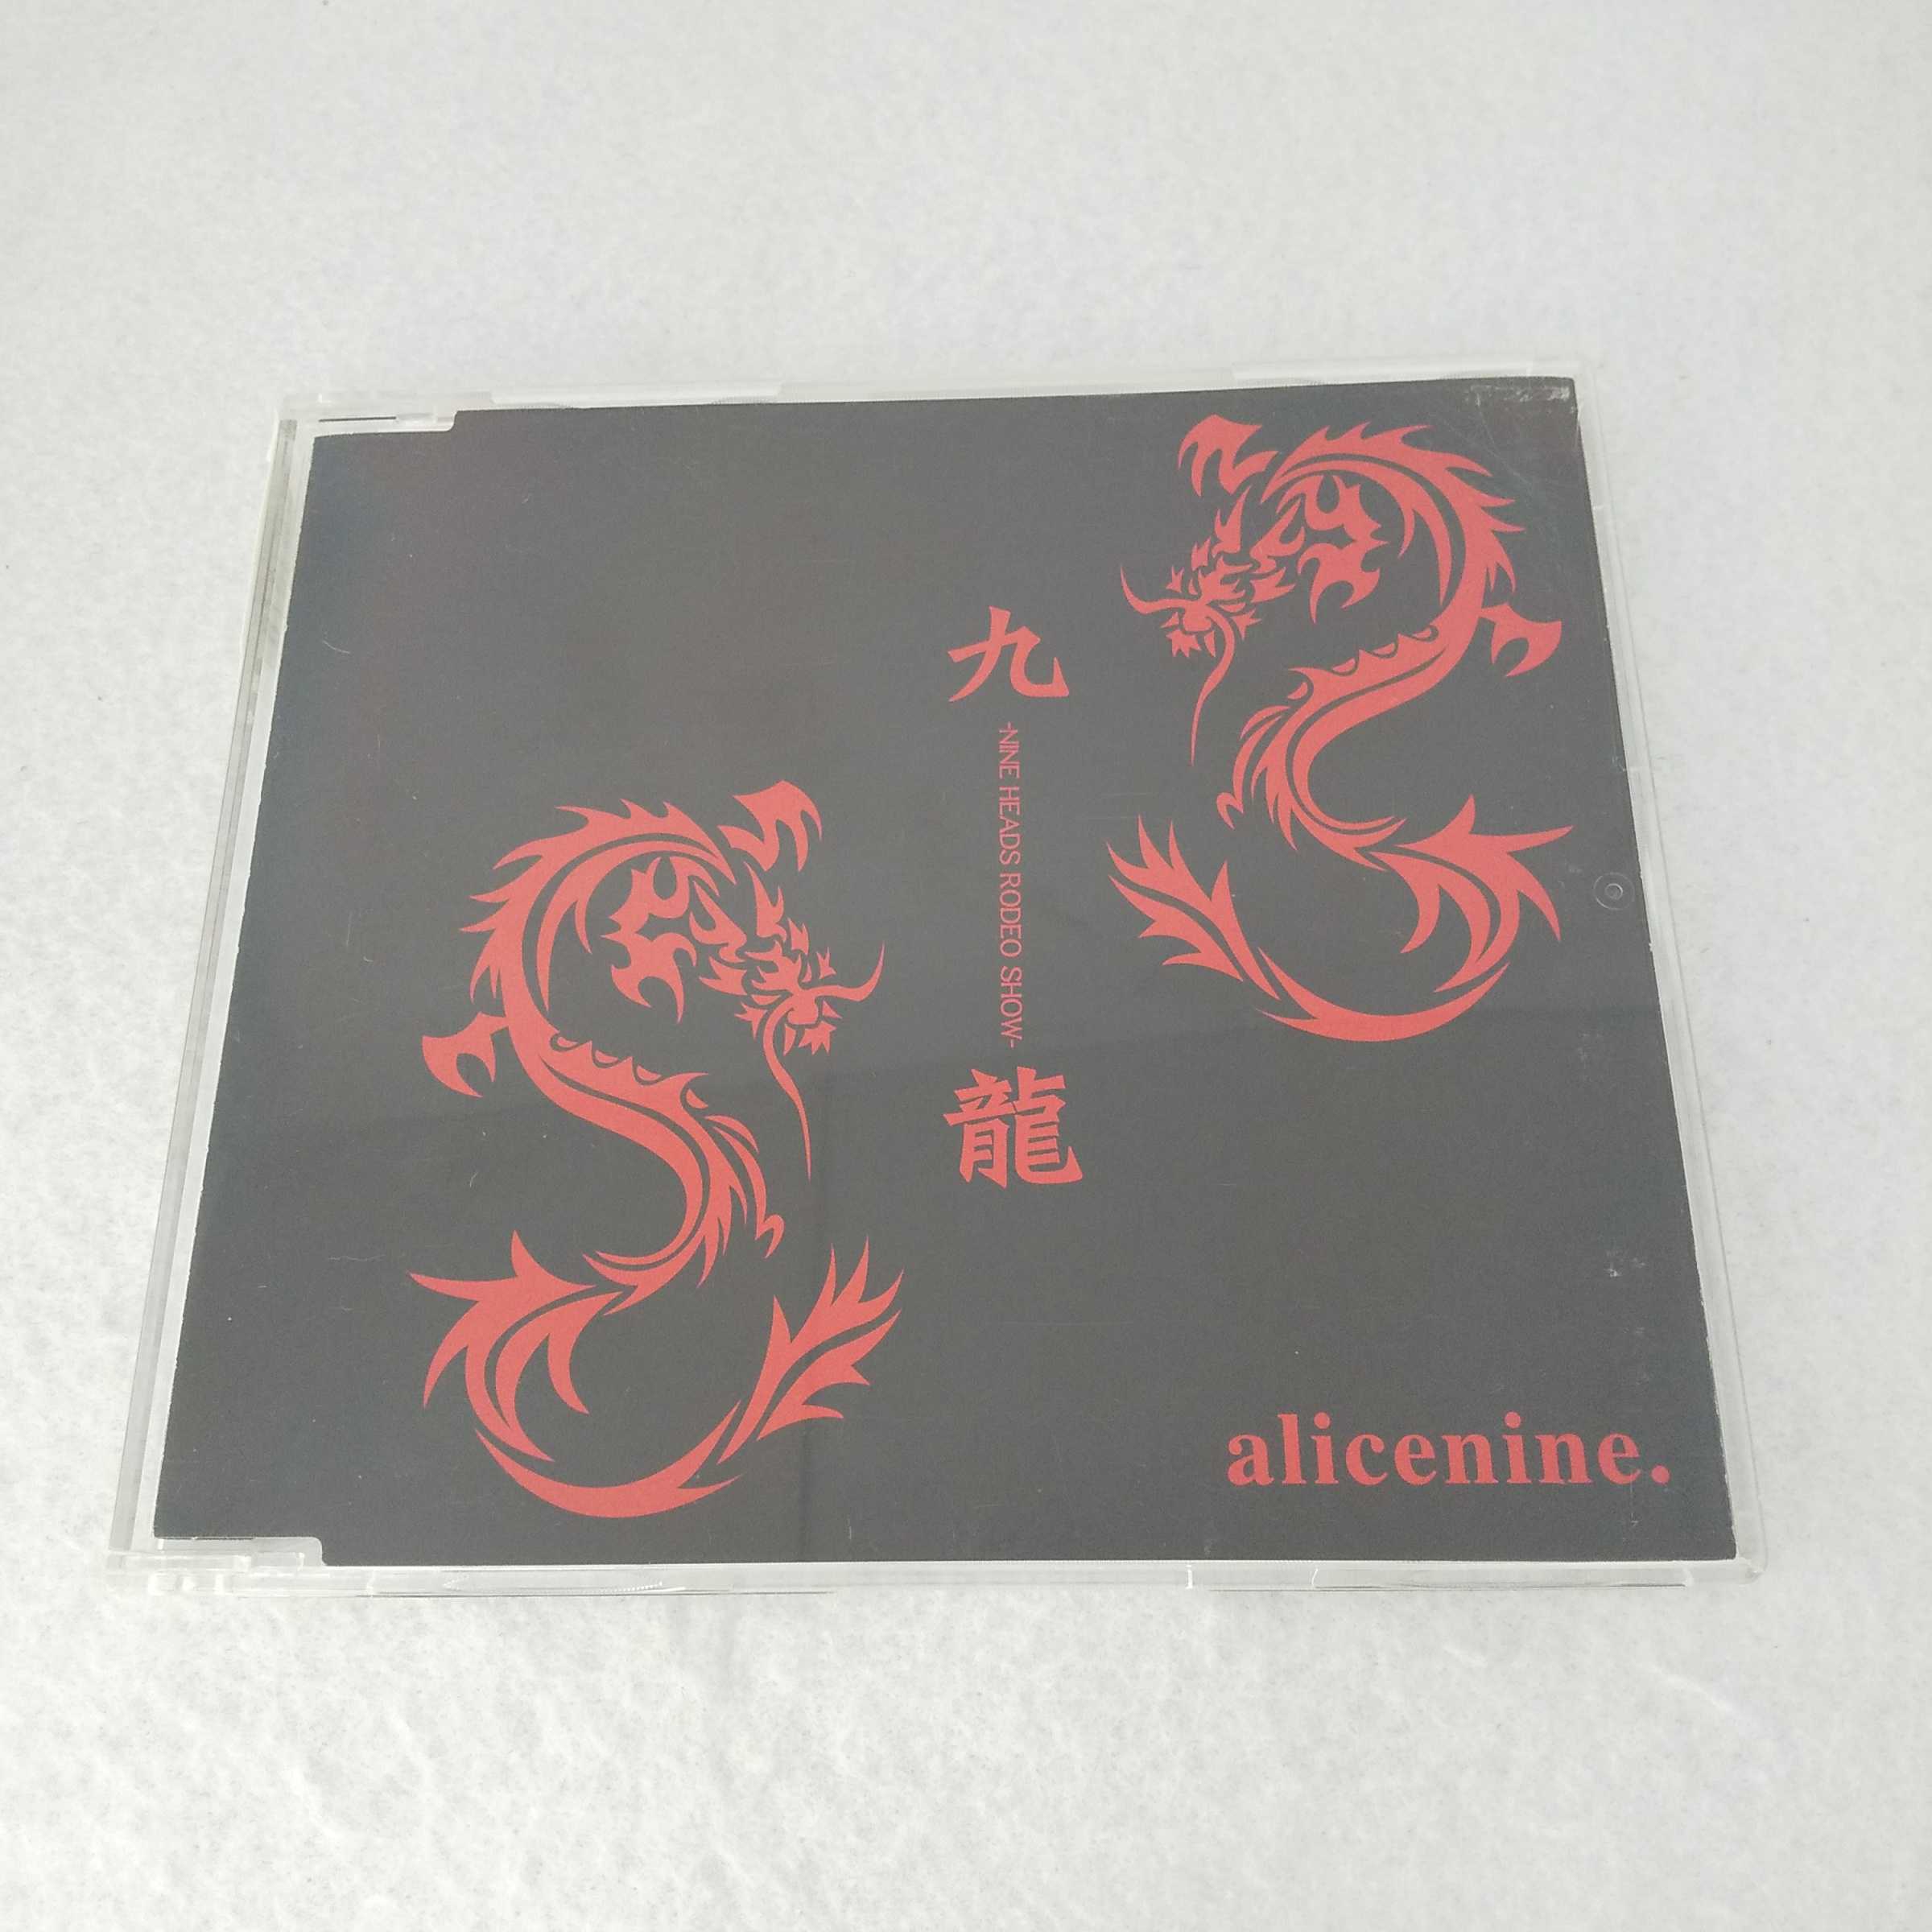 AC07878 【中古】 【CD】 九龍 ーNINE HEADS RODEO SHOWー/alicenine.